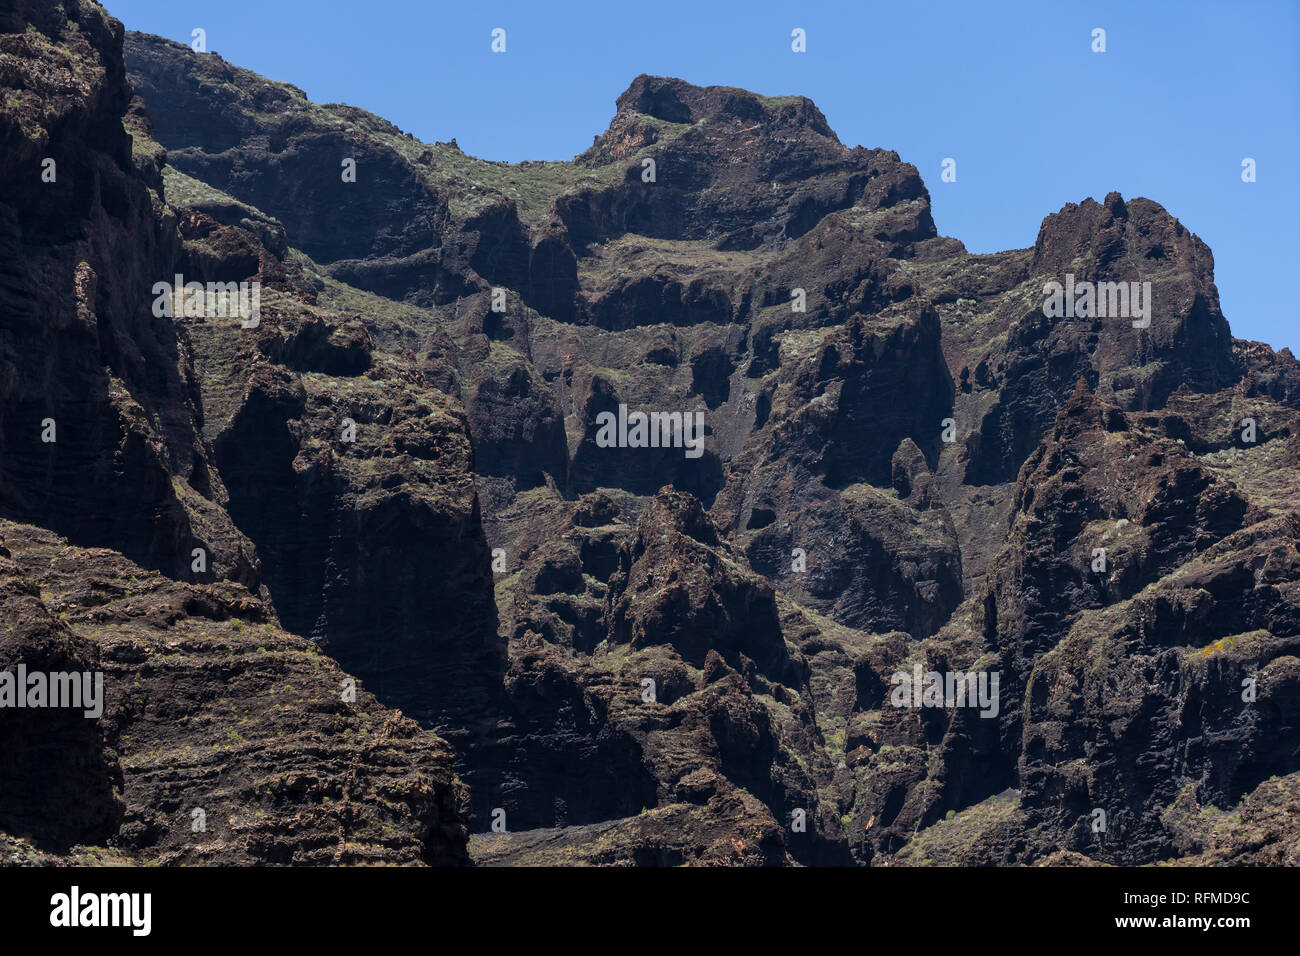 Vertical cliffs Acantilados de Los Gigantes (Cliffs of the Giants). View from Atlantic Ocean. Tenerife. Canary Islands. Spain. Stock Photo